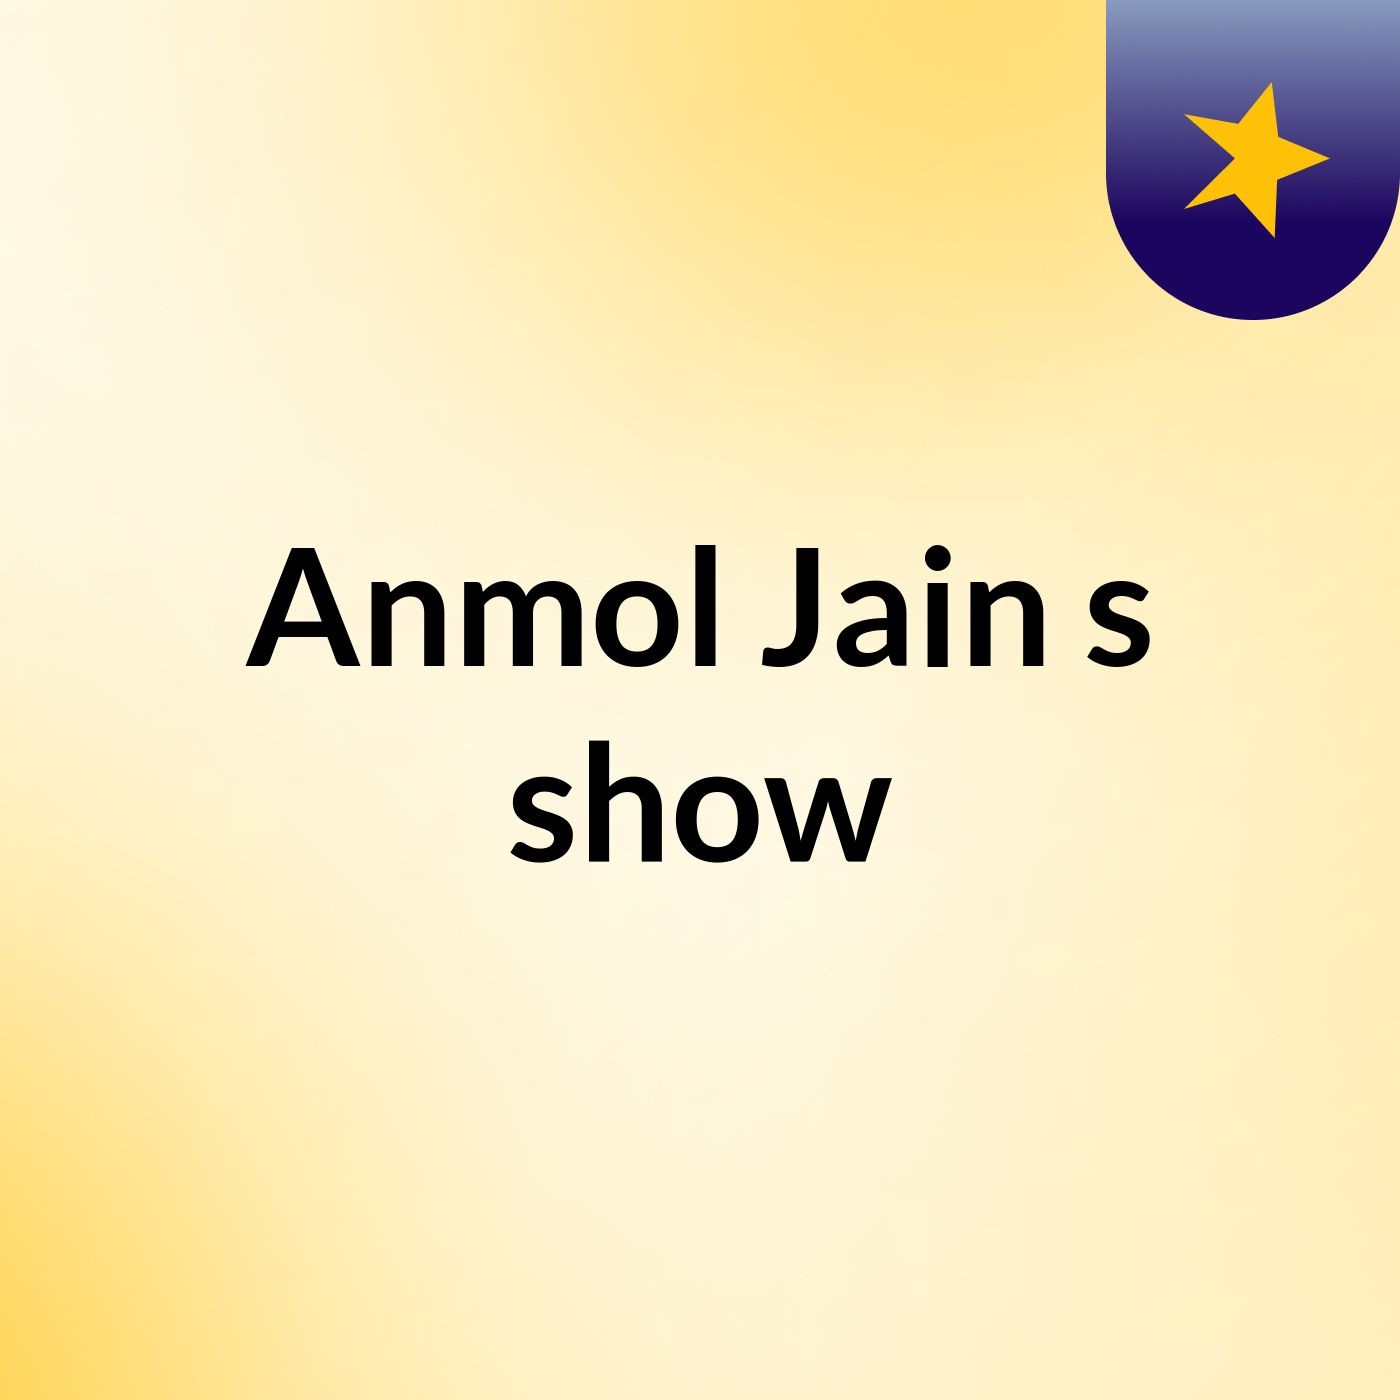 Anmol Jain's show